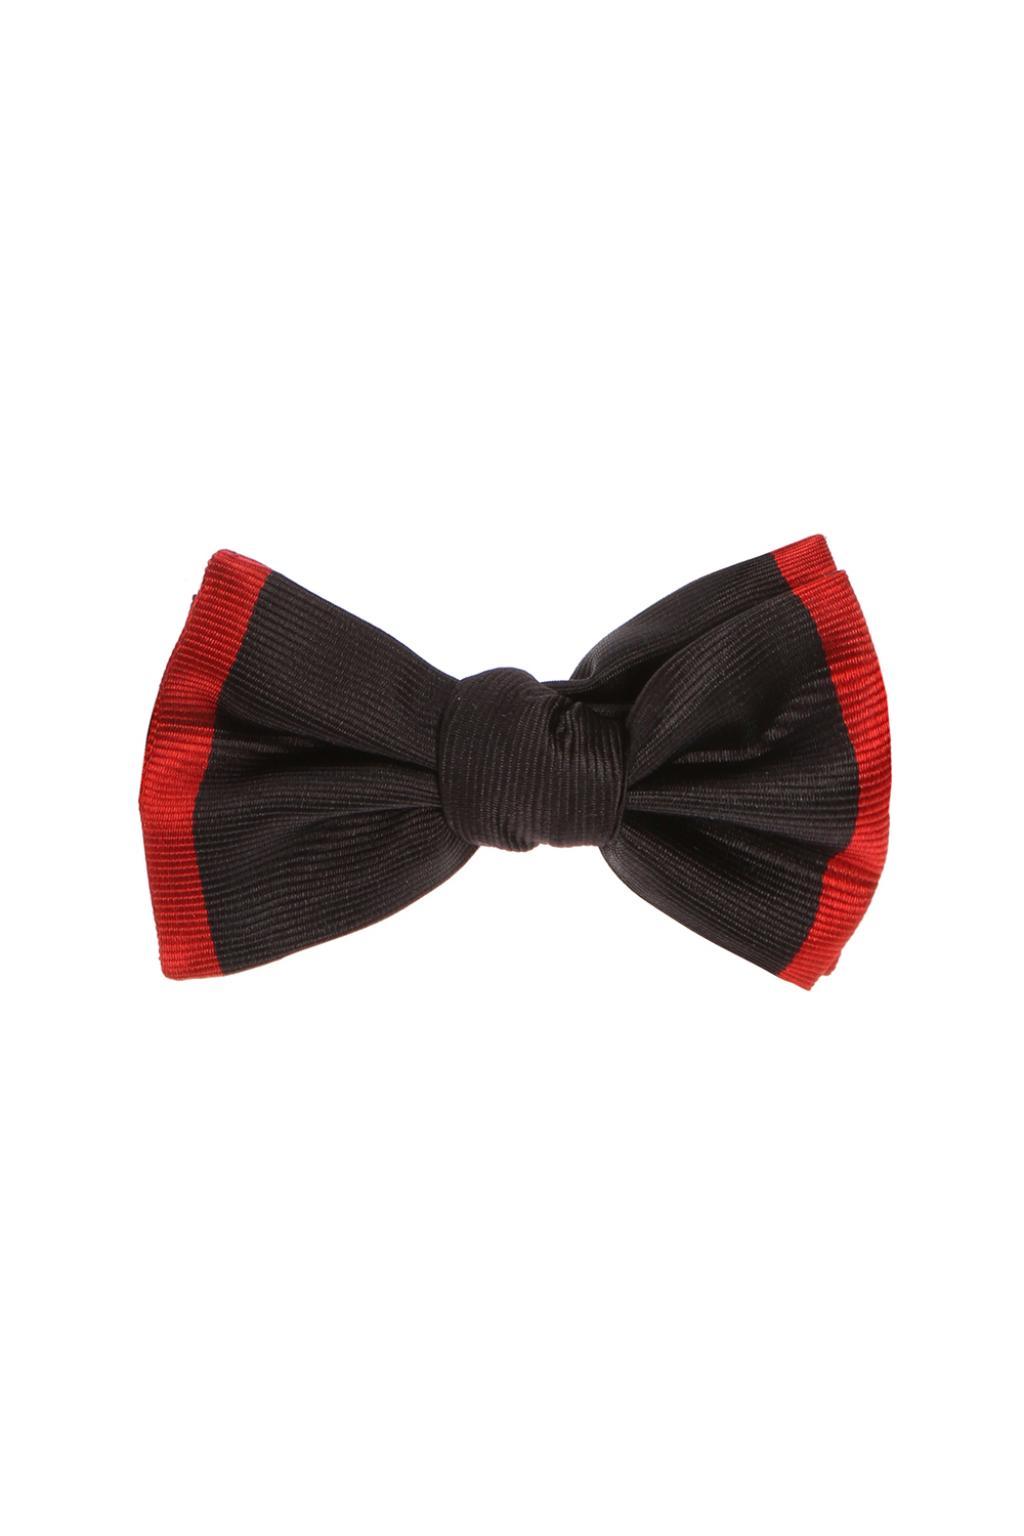 Gucci Silk Bow-tie in Black for Men - Lyst